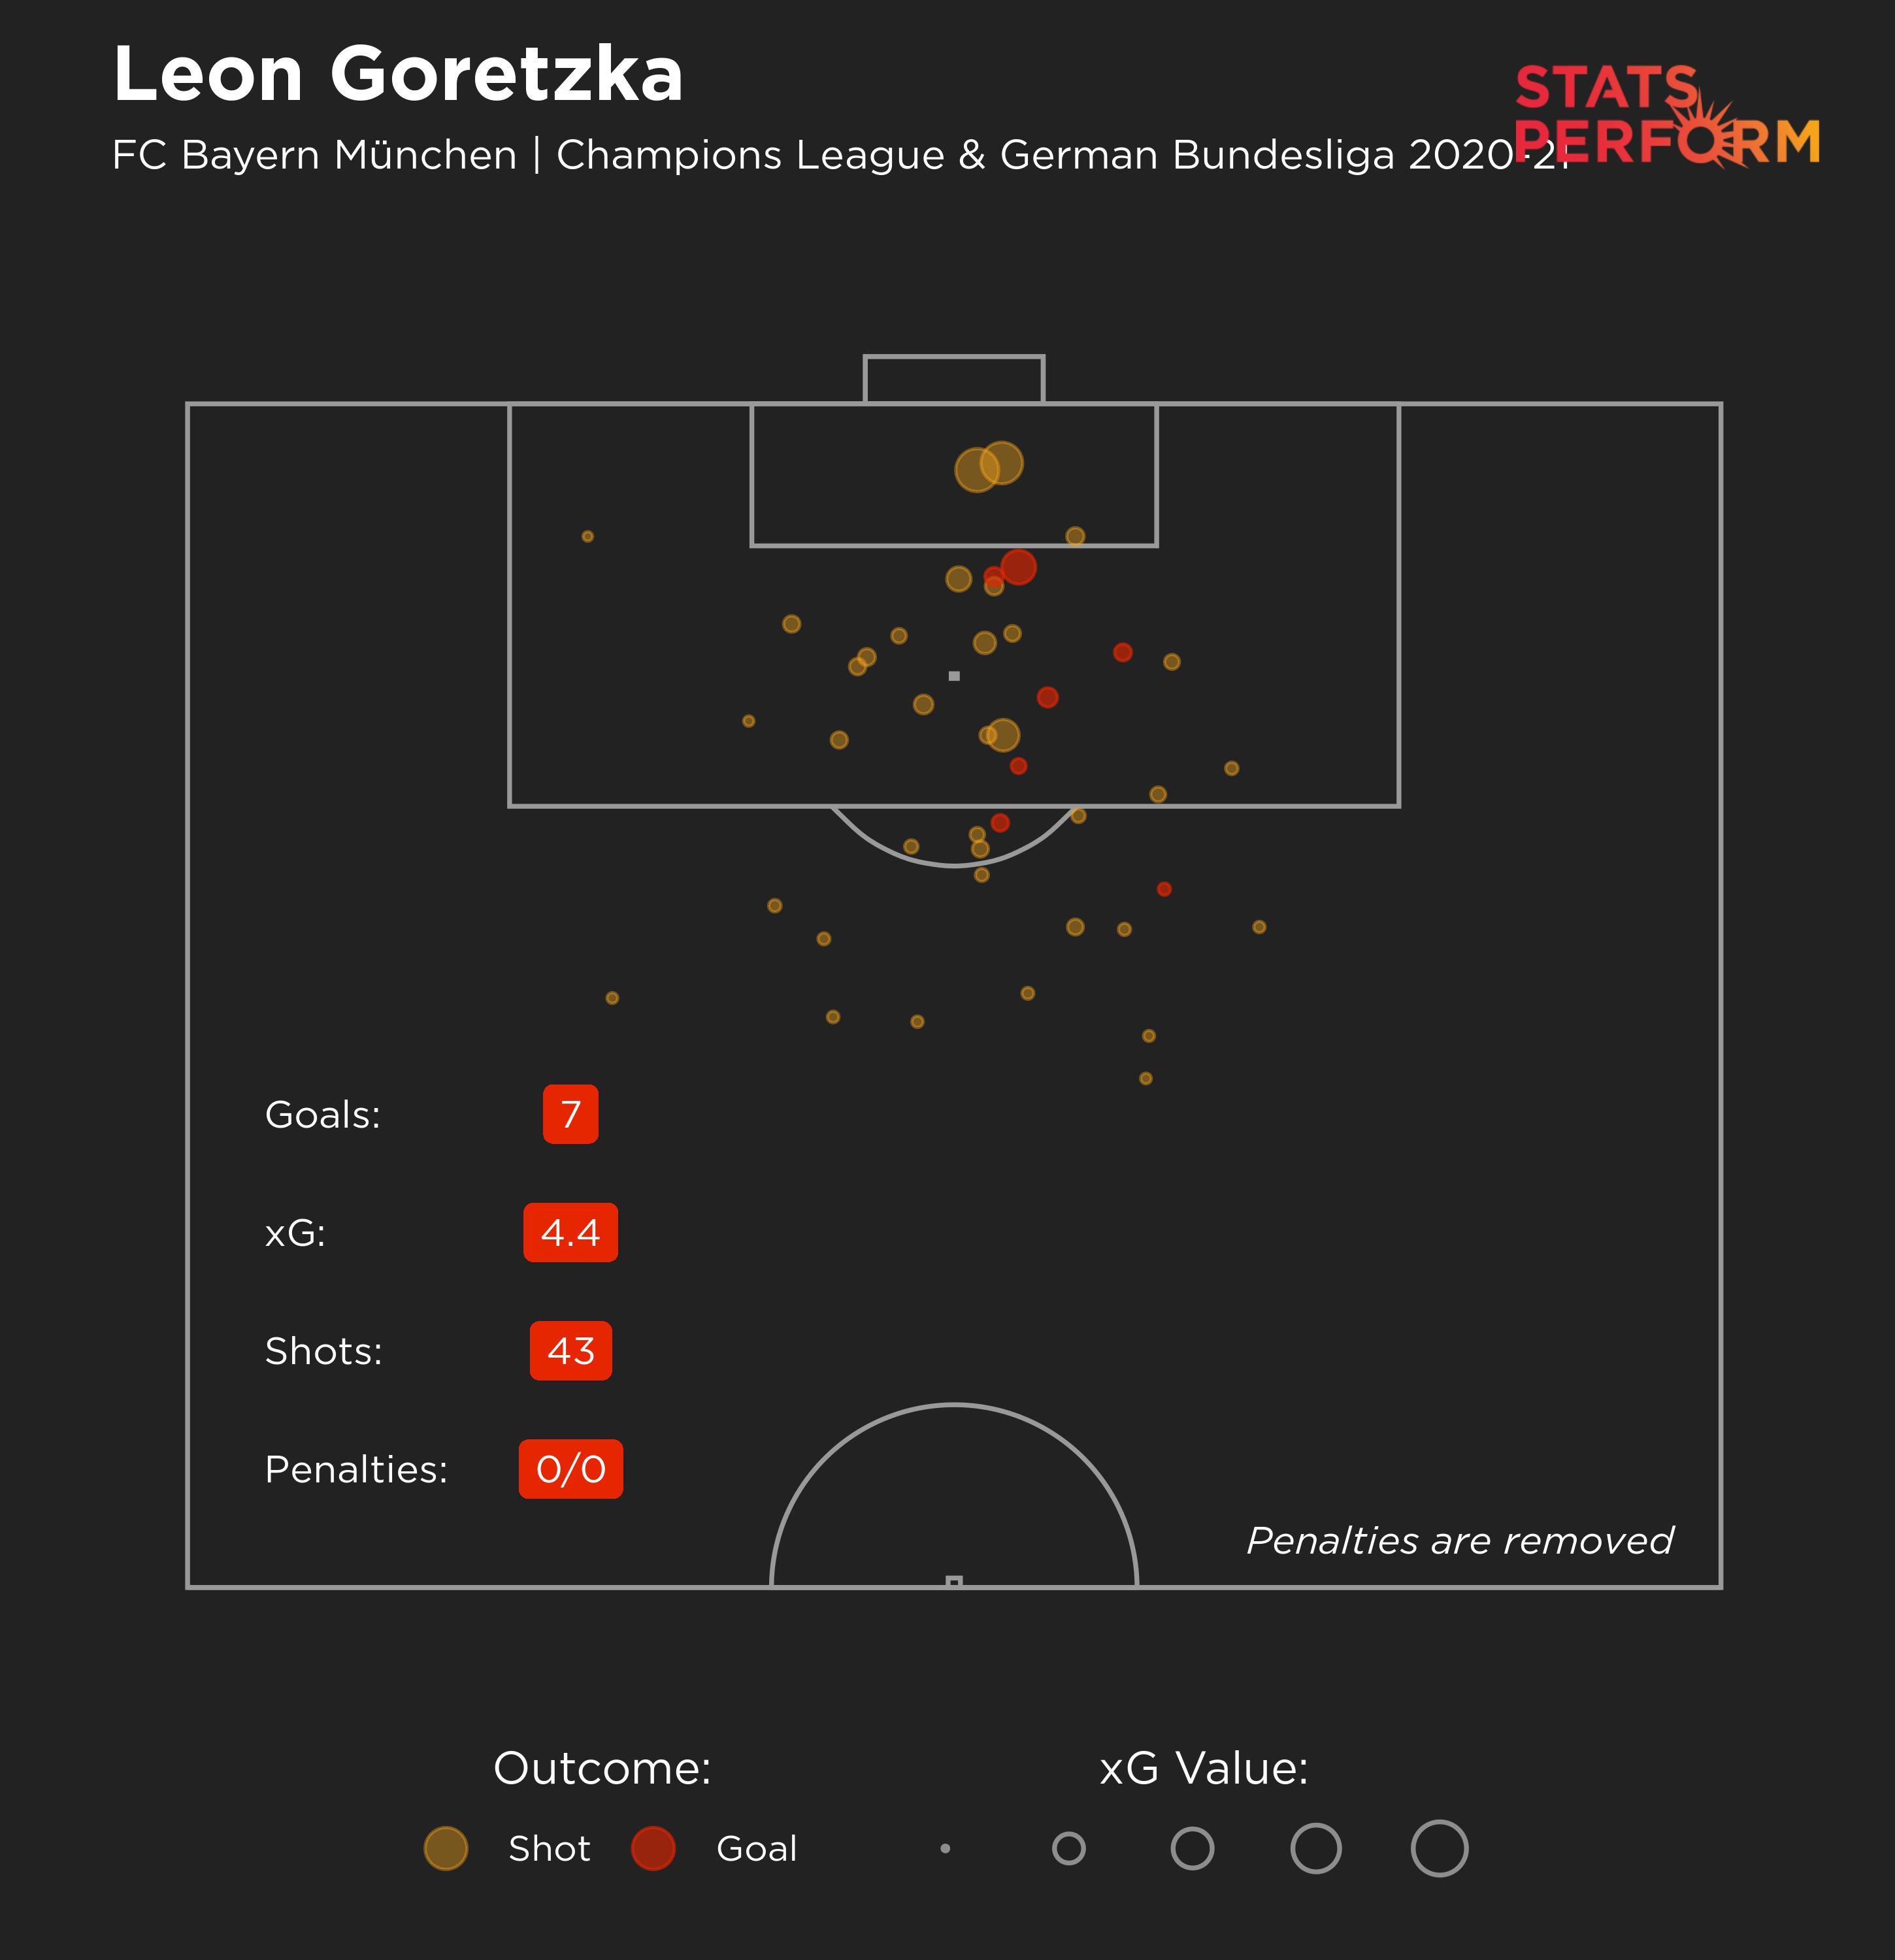 Leon Goretzka scored another key goal against Leipzig